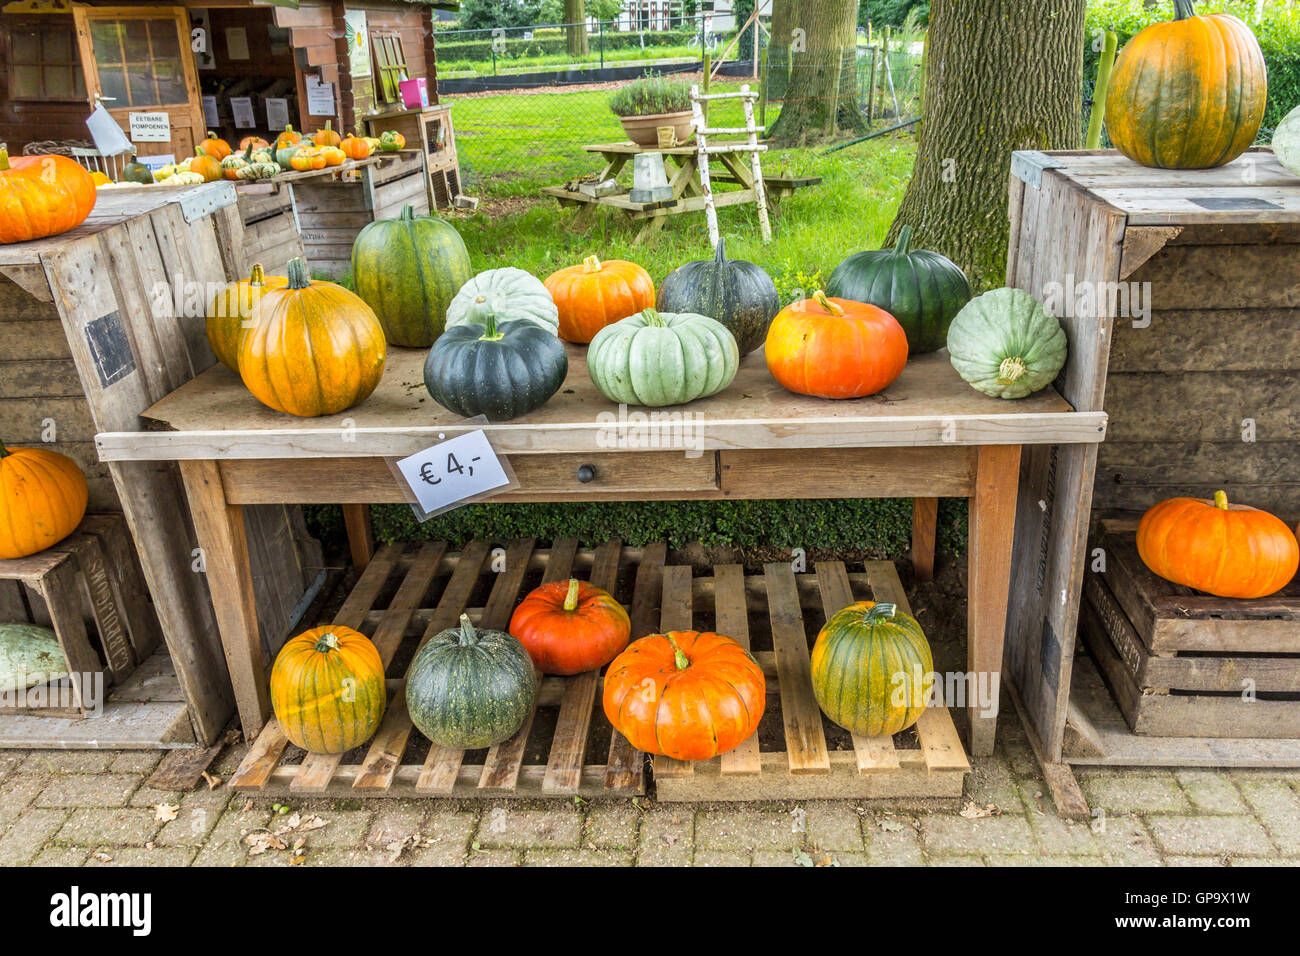 gelderland, the Netherlands - August 13, 2016: pumpkins for sale in farmyard Stock Photo